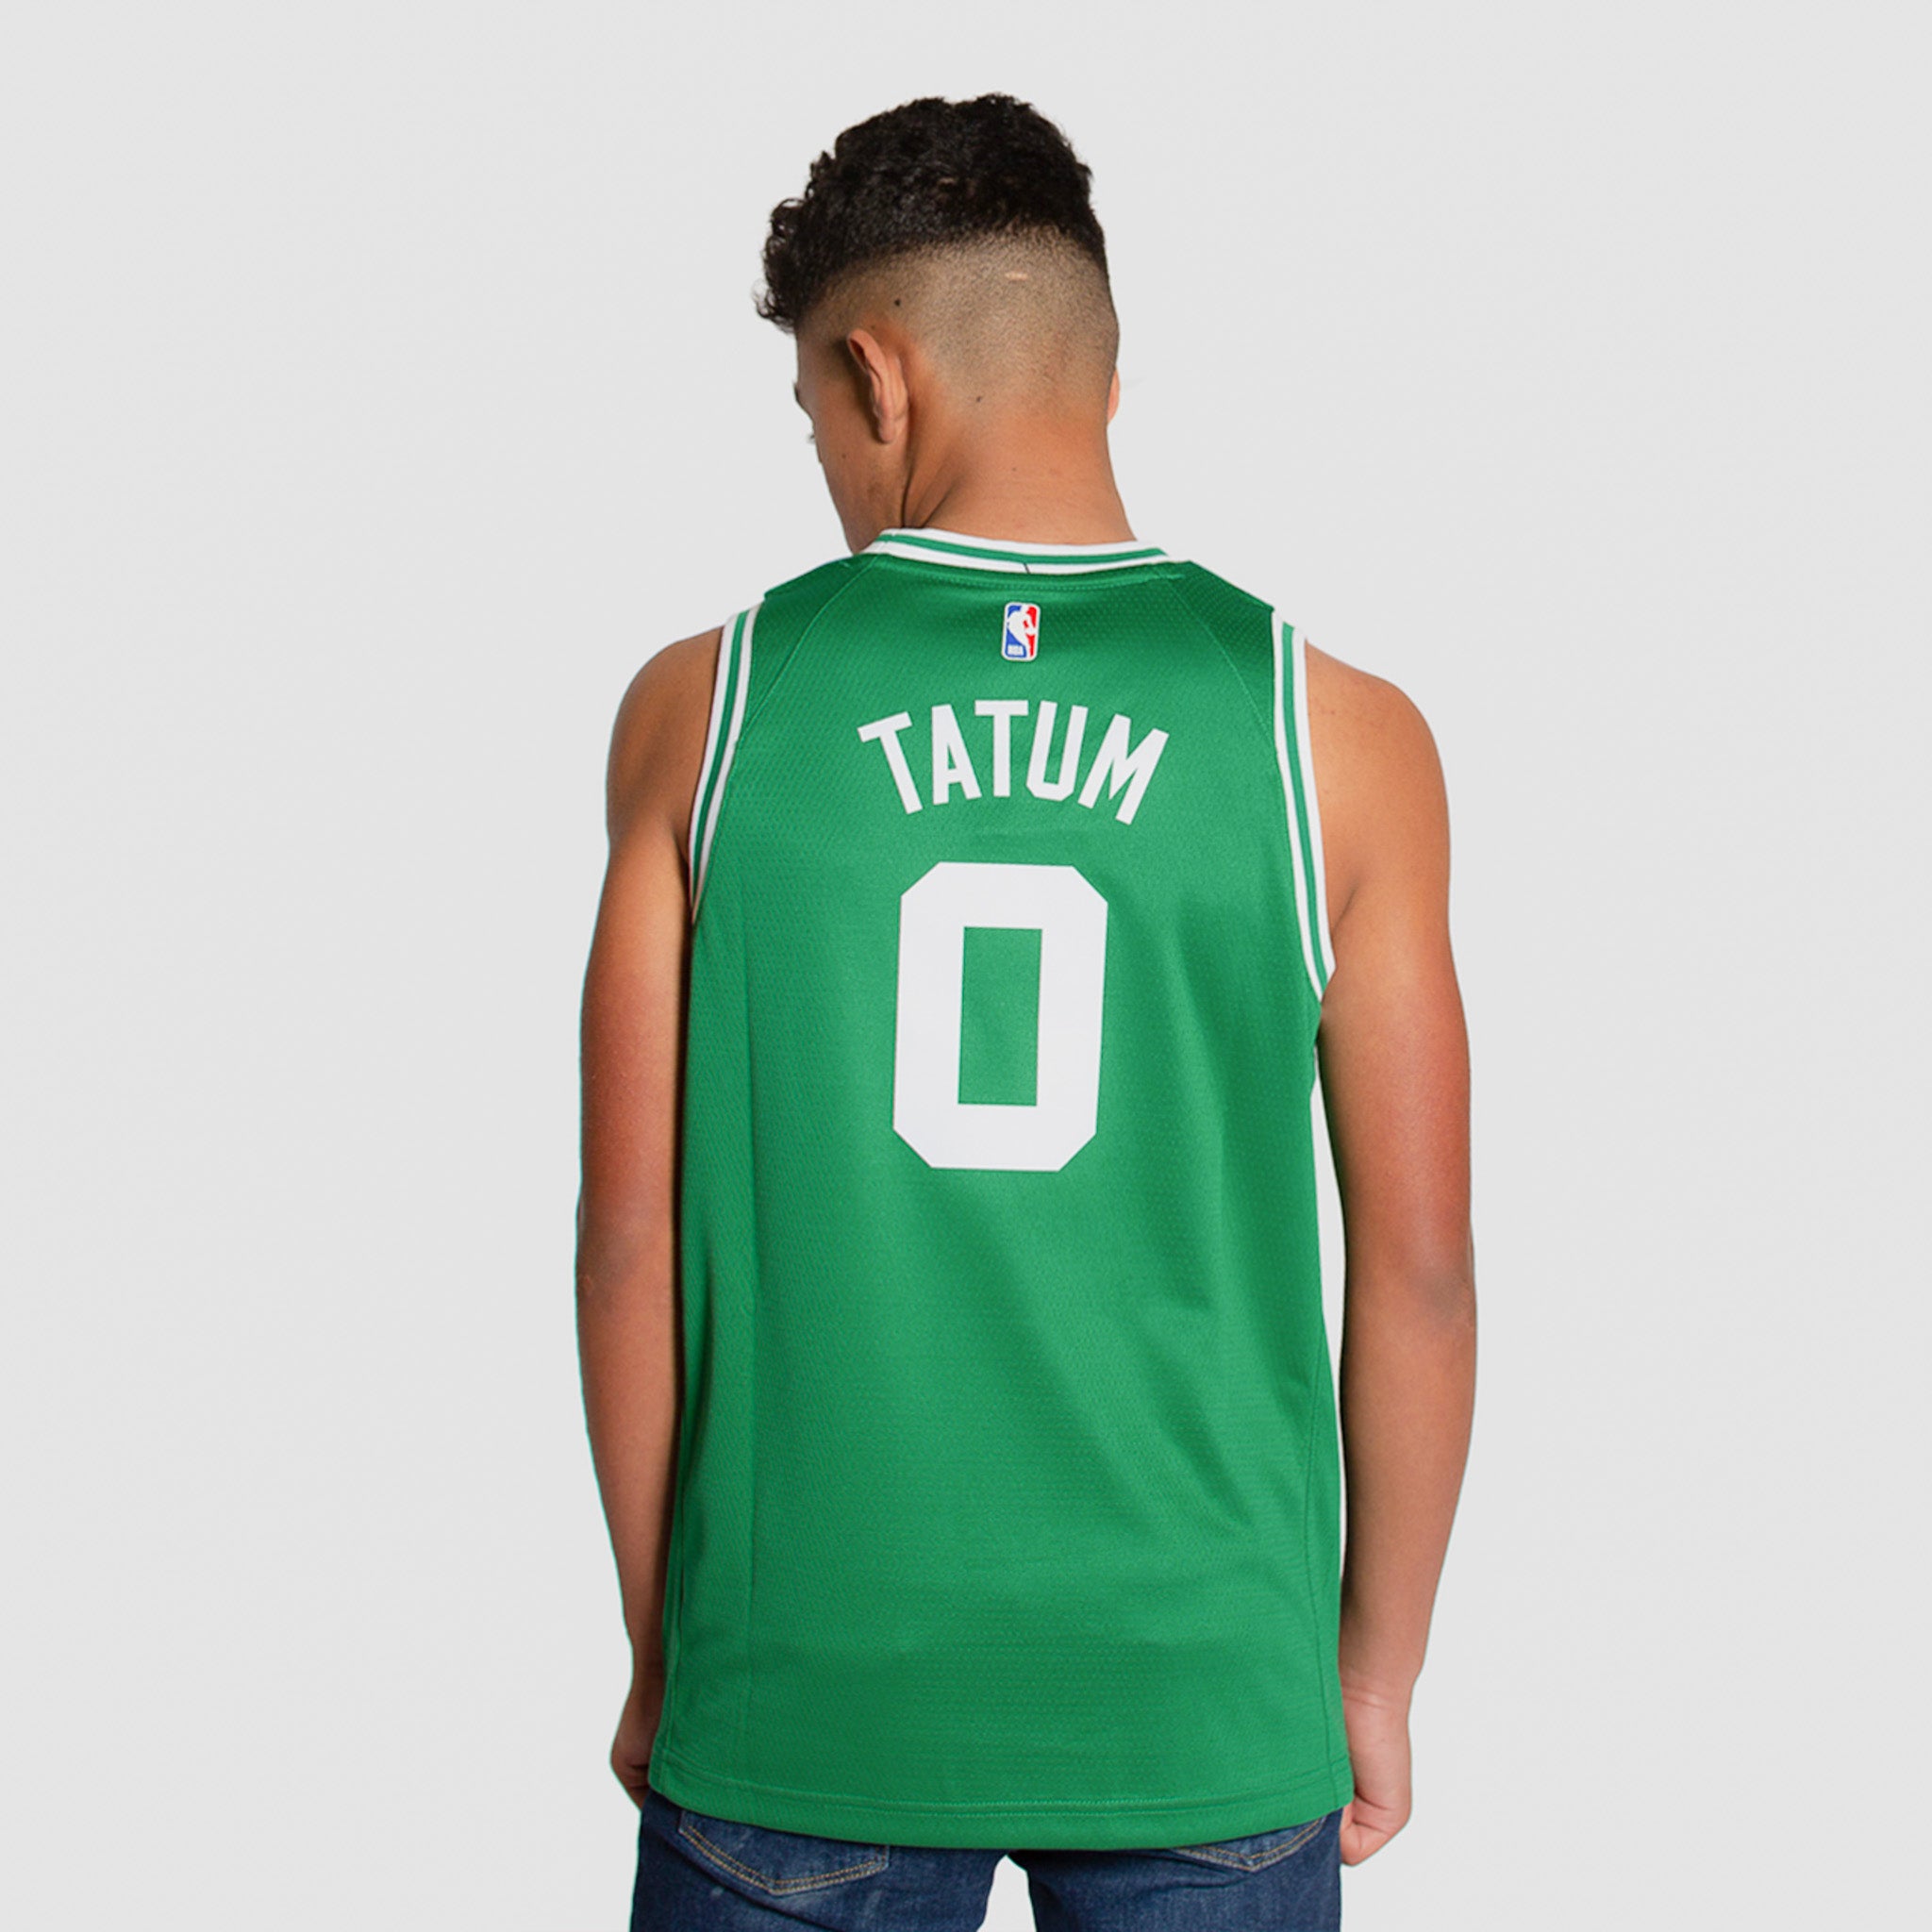 Kyrie Irving Boston Celtics Nike Youth Swingman Jersey Green - Icon Edition